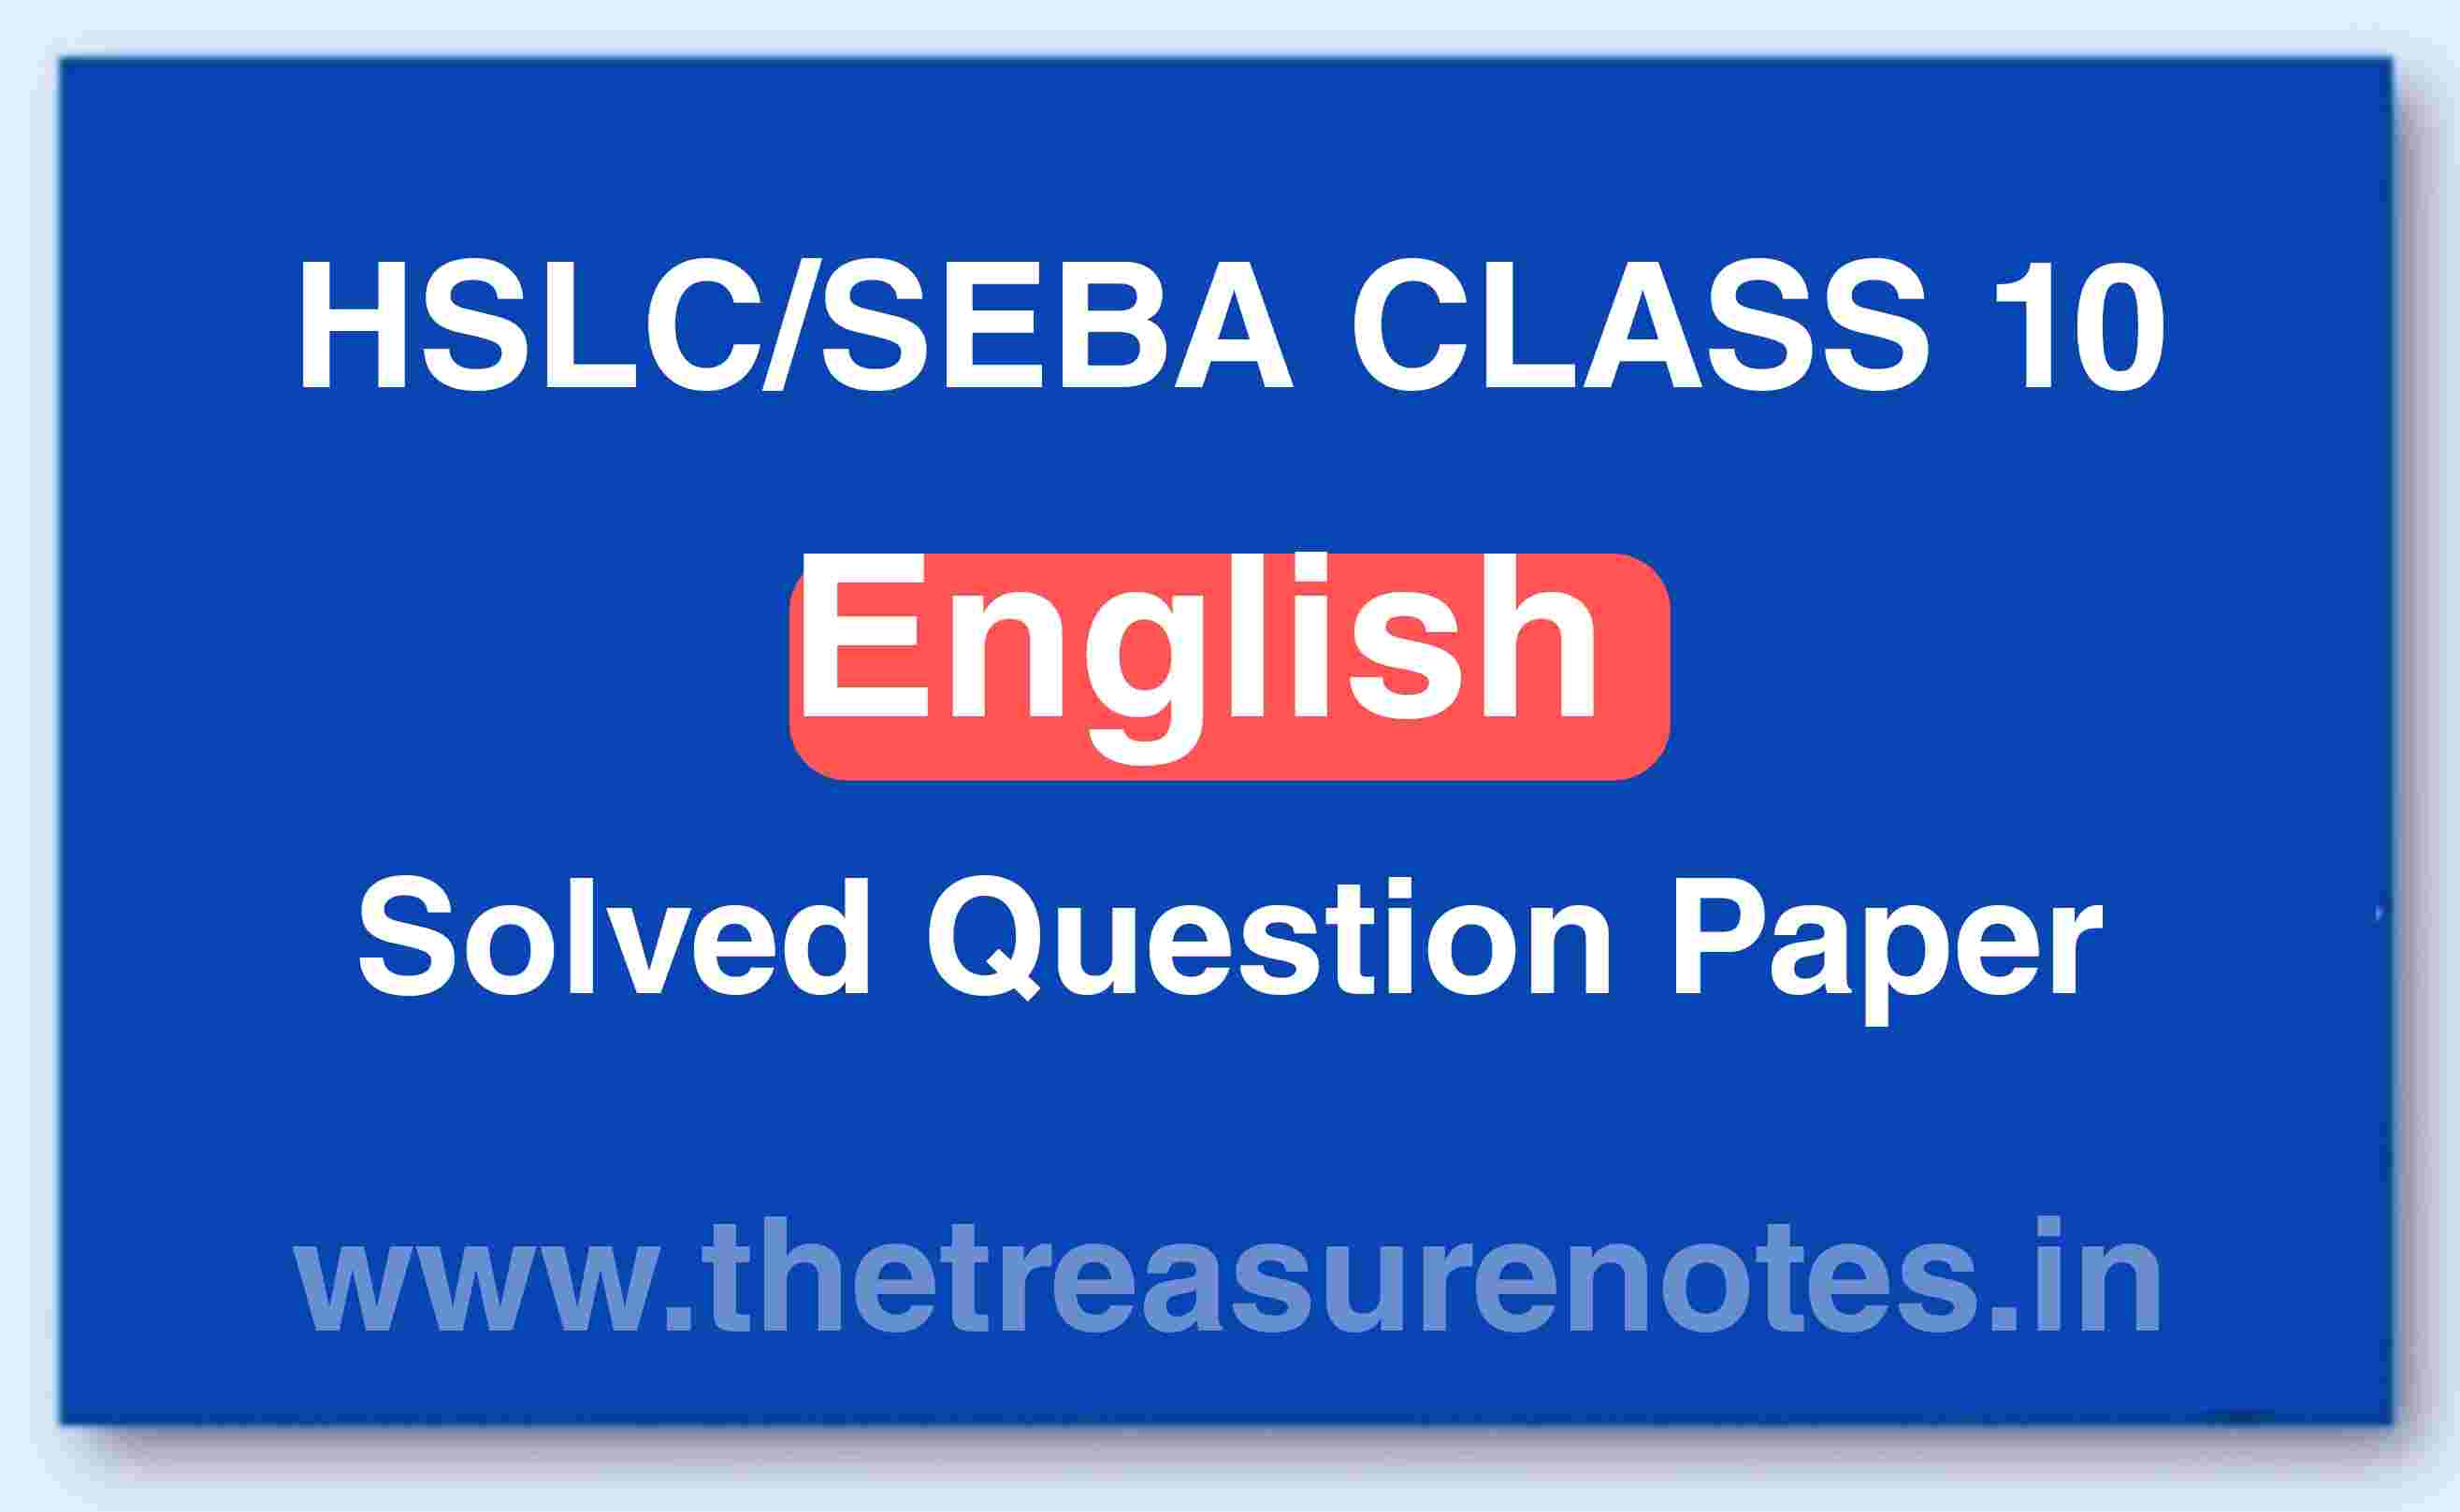 HSLC/SEBA Class 10 English Solved Question Paper 2016